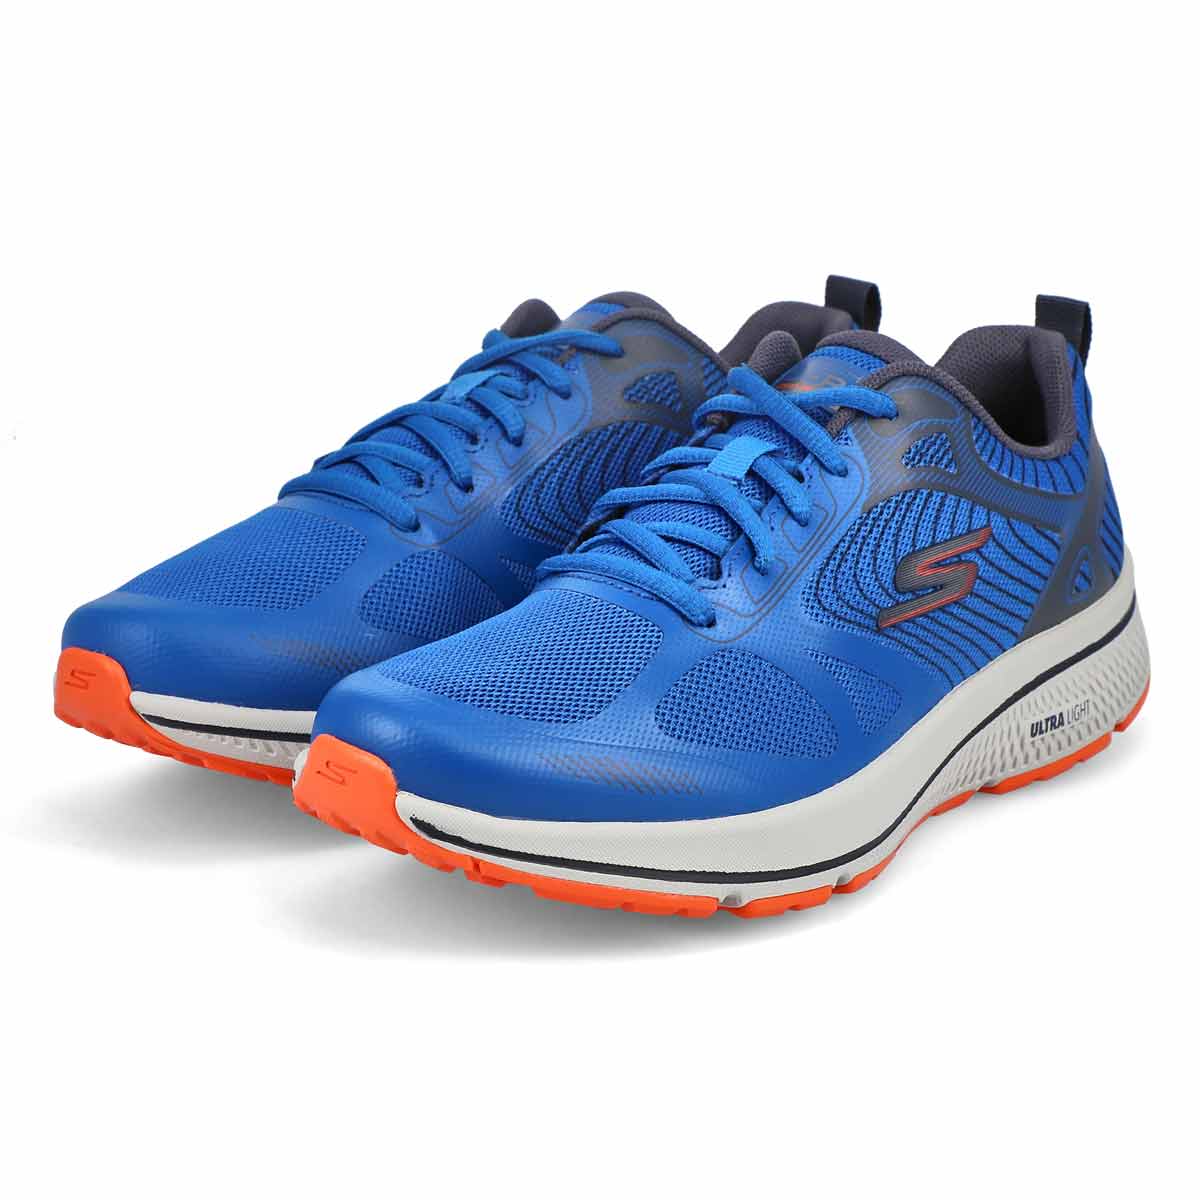 Men's Go Run Running Shoes - Blue/ Orange